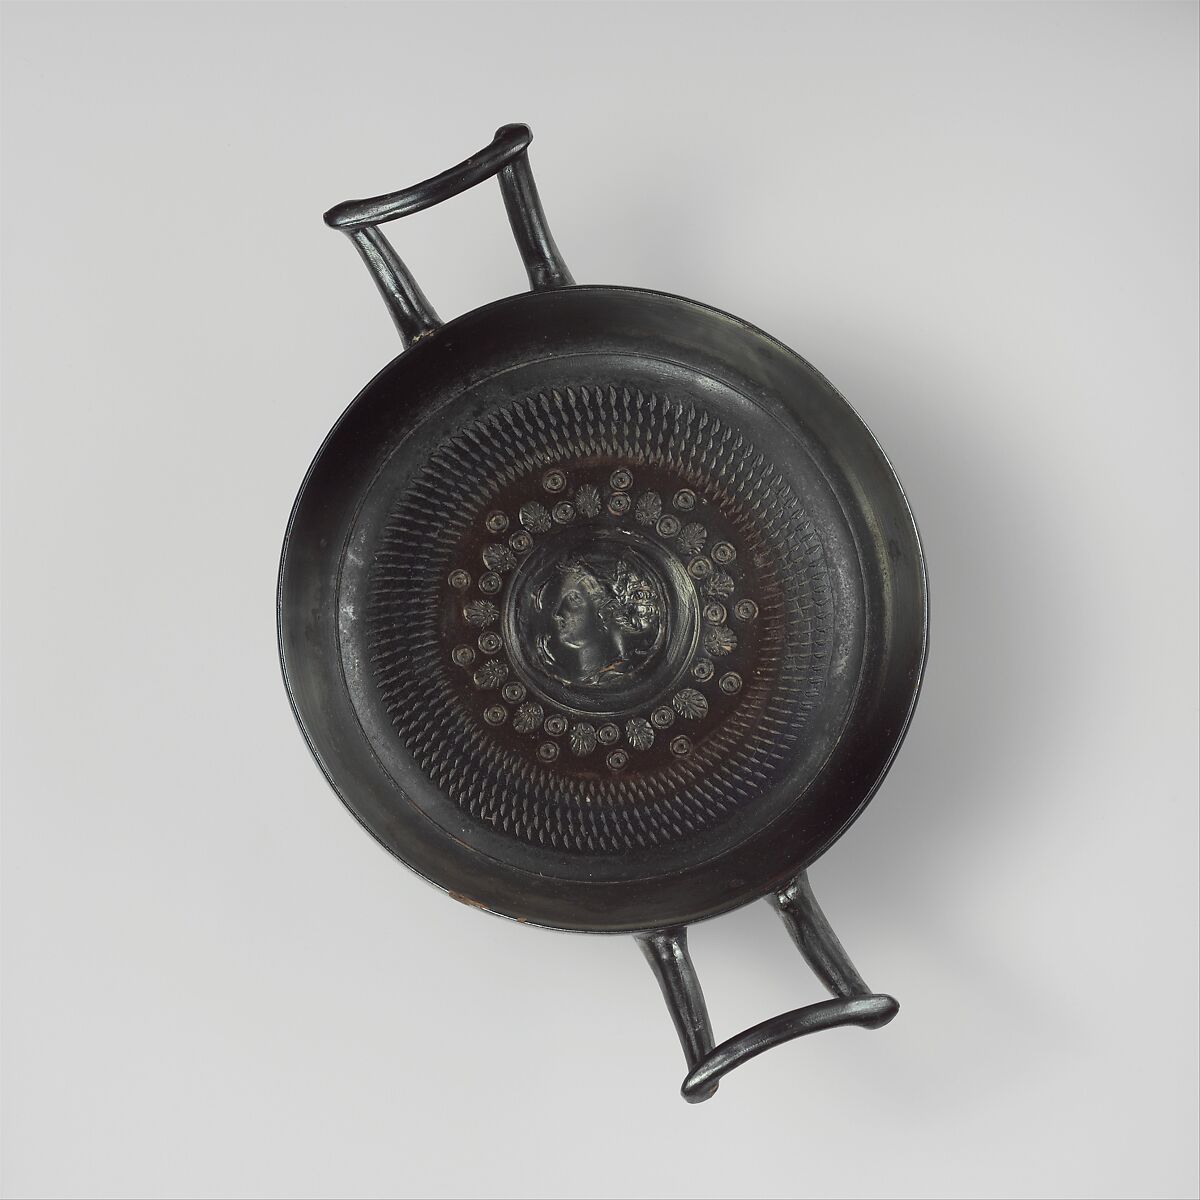 Terracotta stemless kylix (drinking cup), Terracotta, Greek, South Italian, Campanian, Calenian 